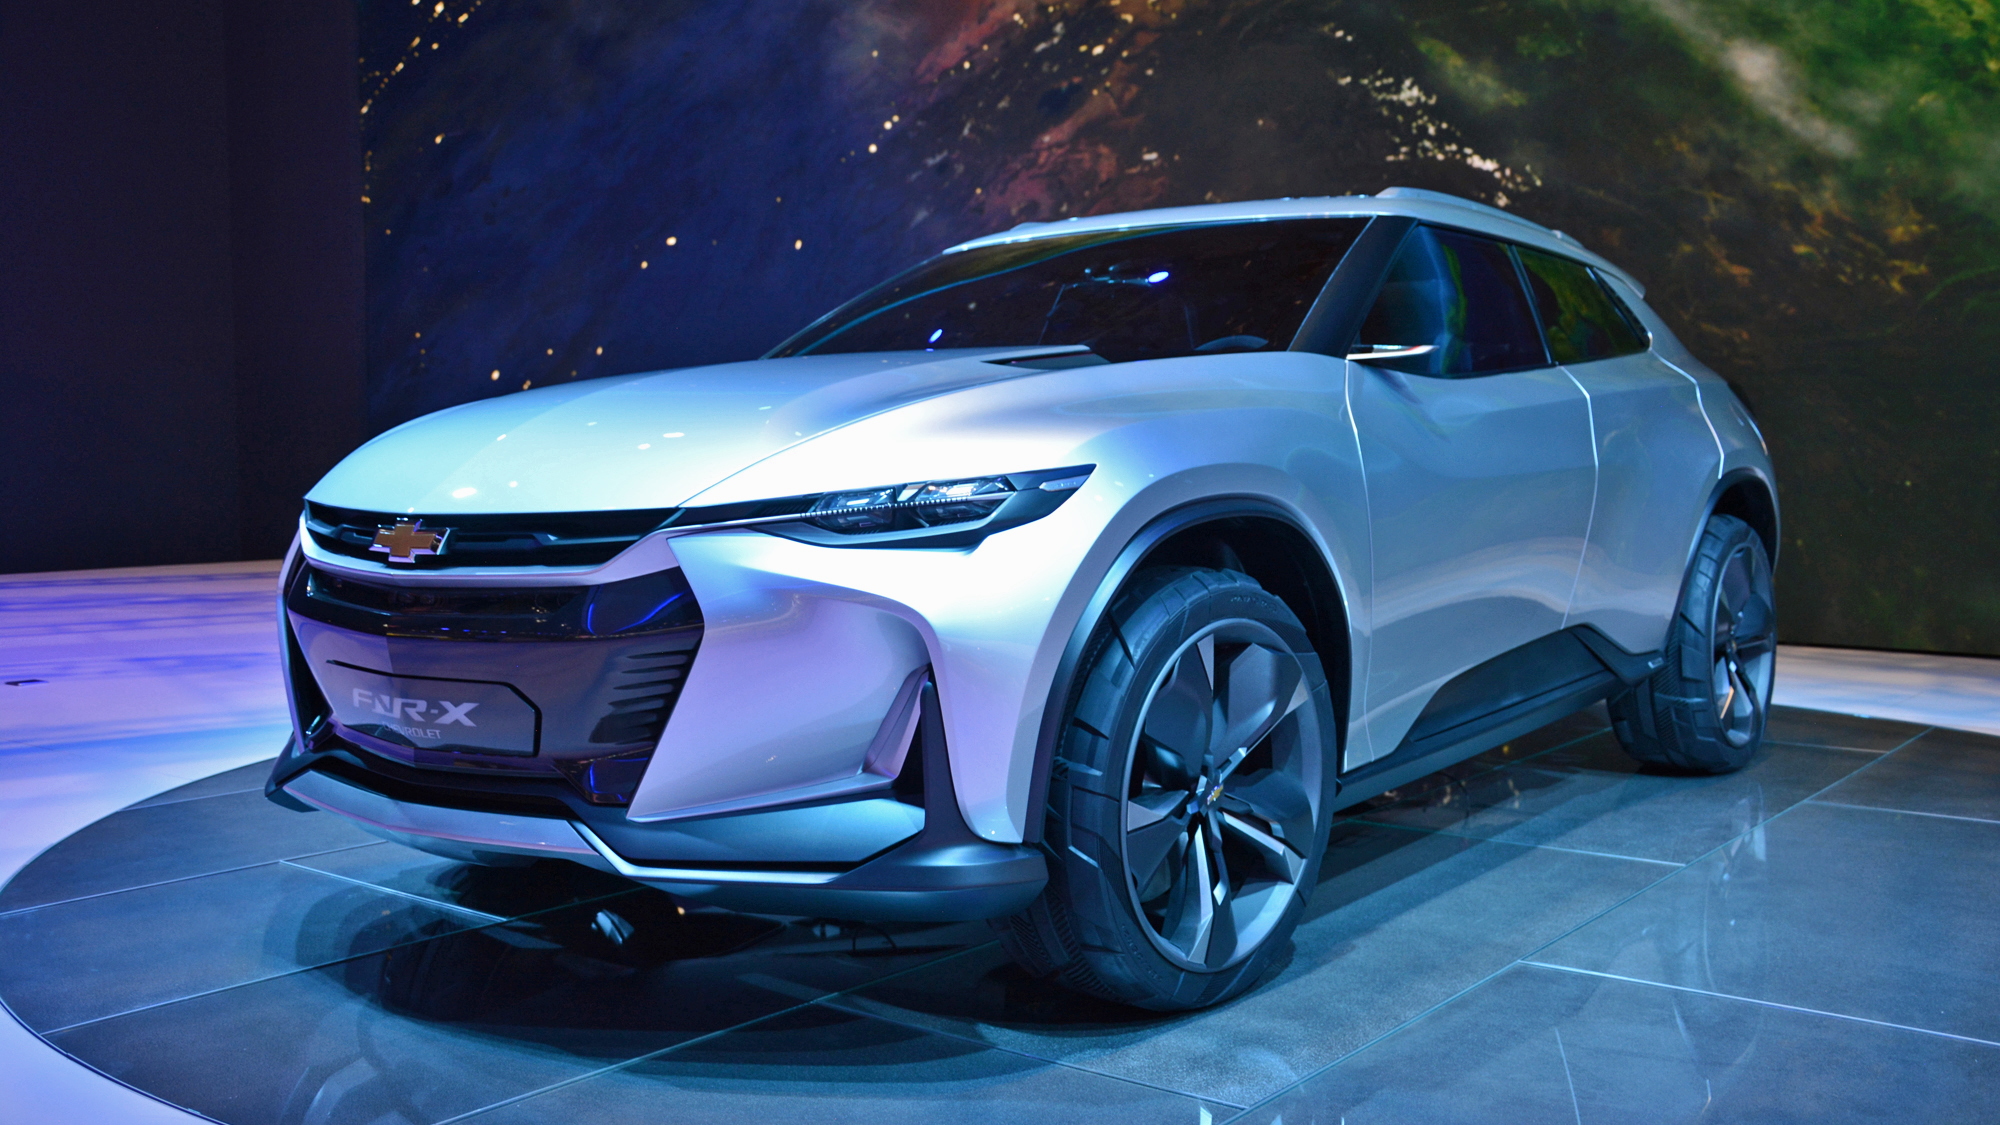 chevrolet fnr x concept debuts at 2017 shanghai auto show